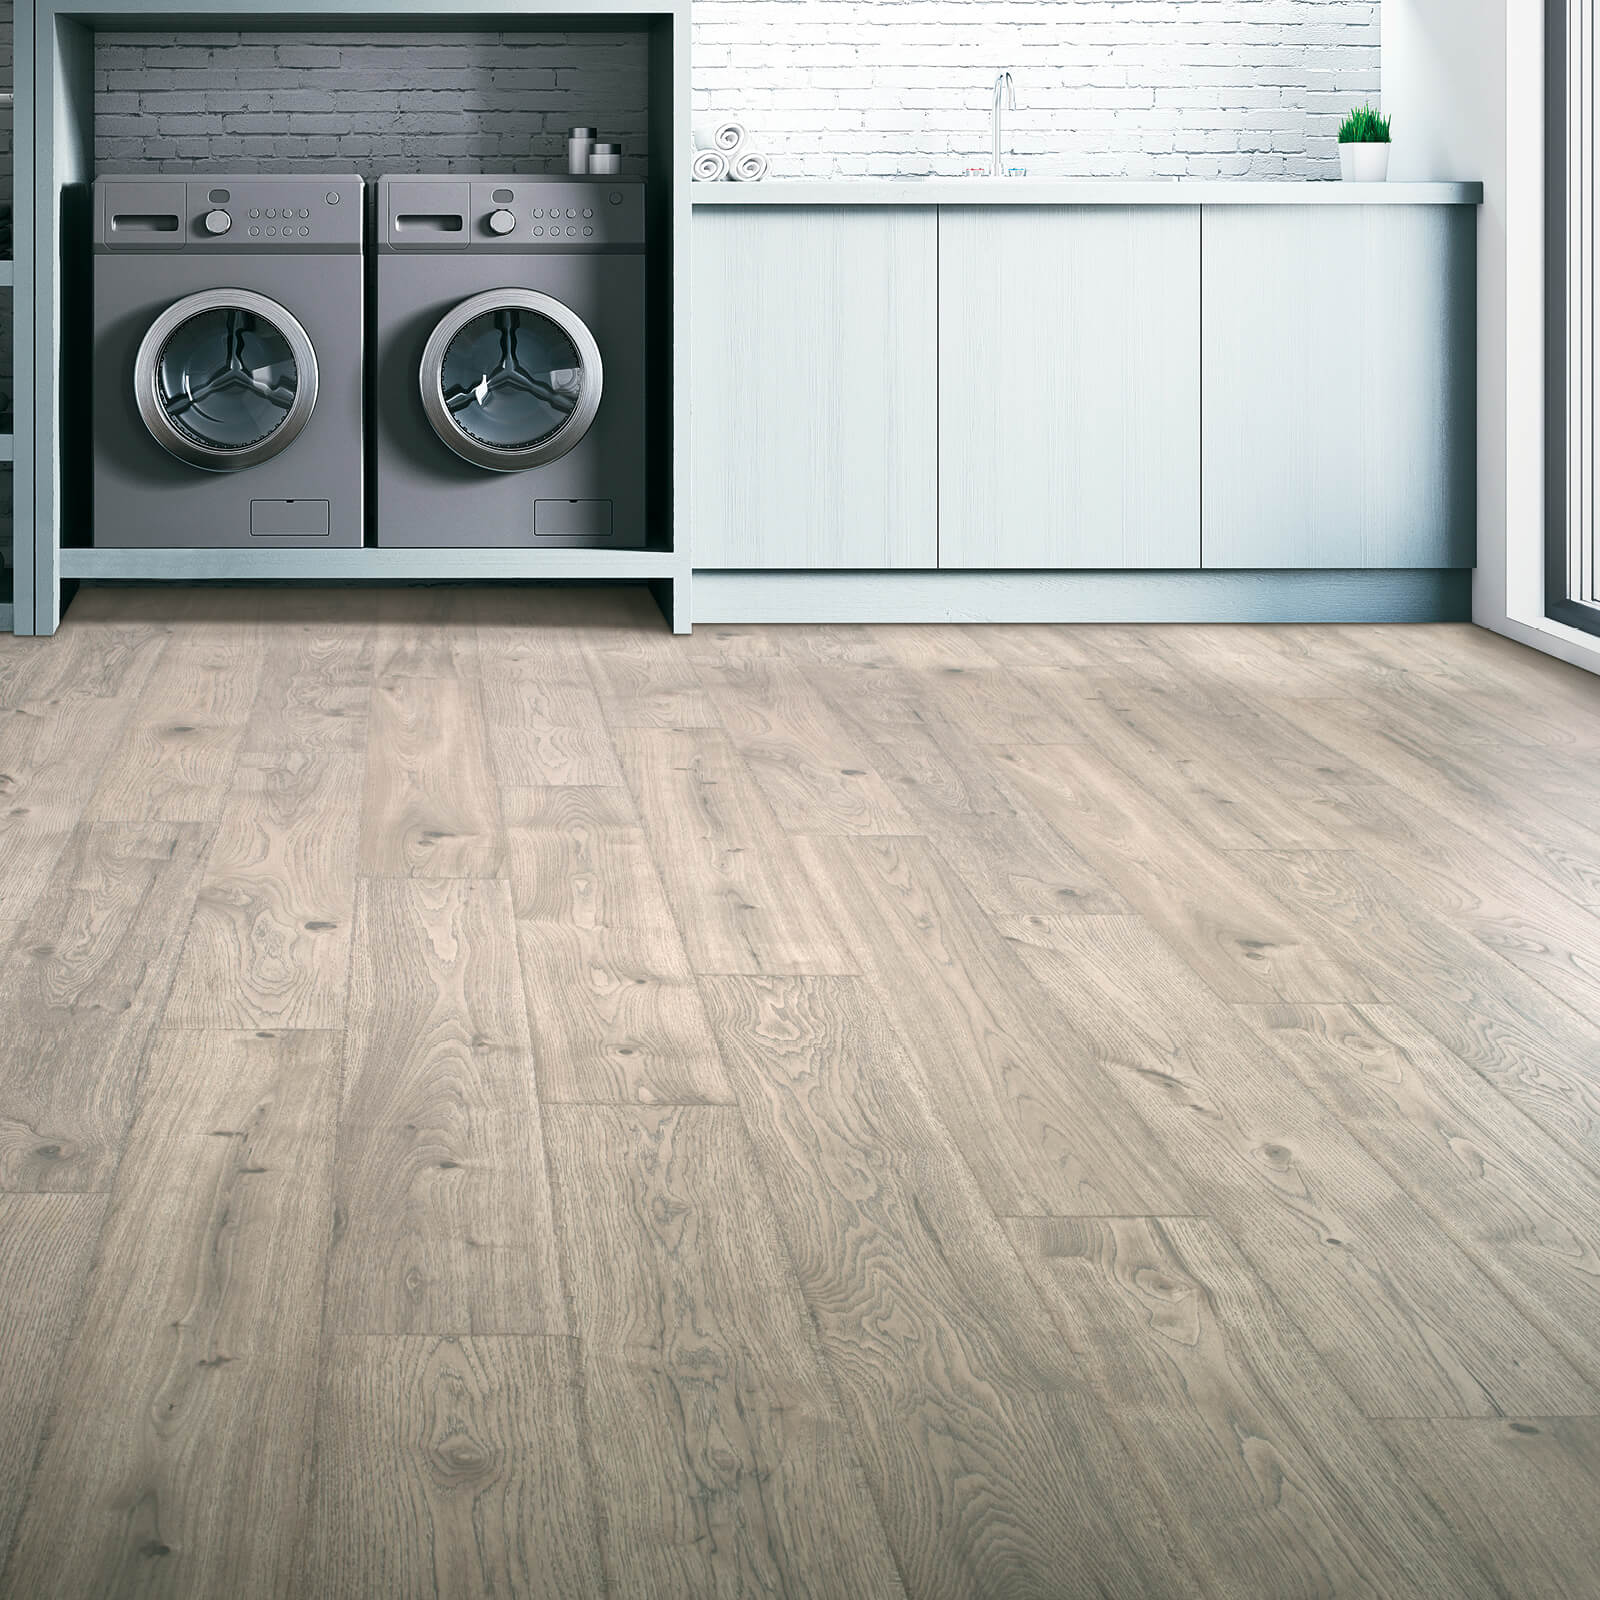 Laundry room Laminate flooring | Bodamer Brothers Flooring